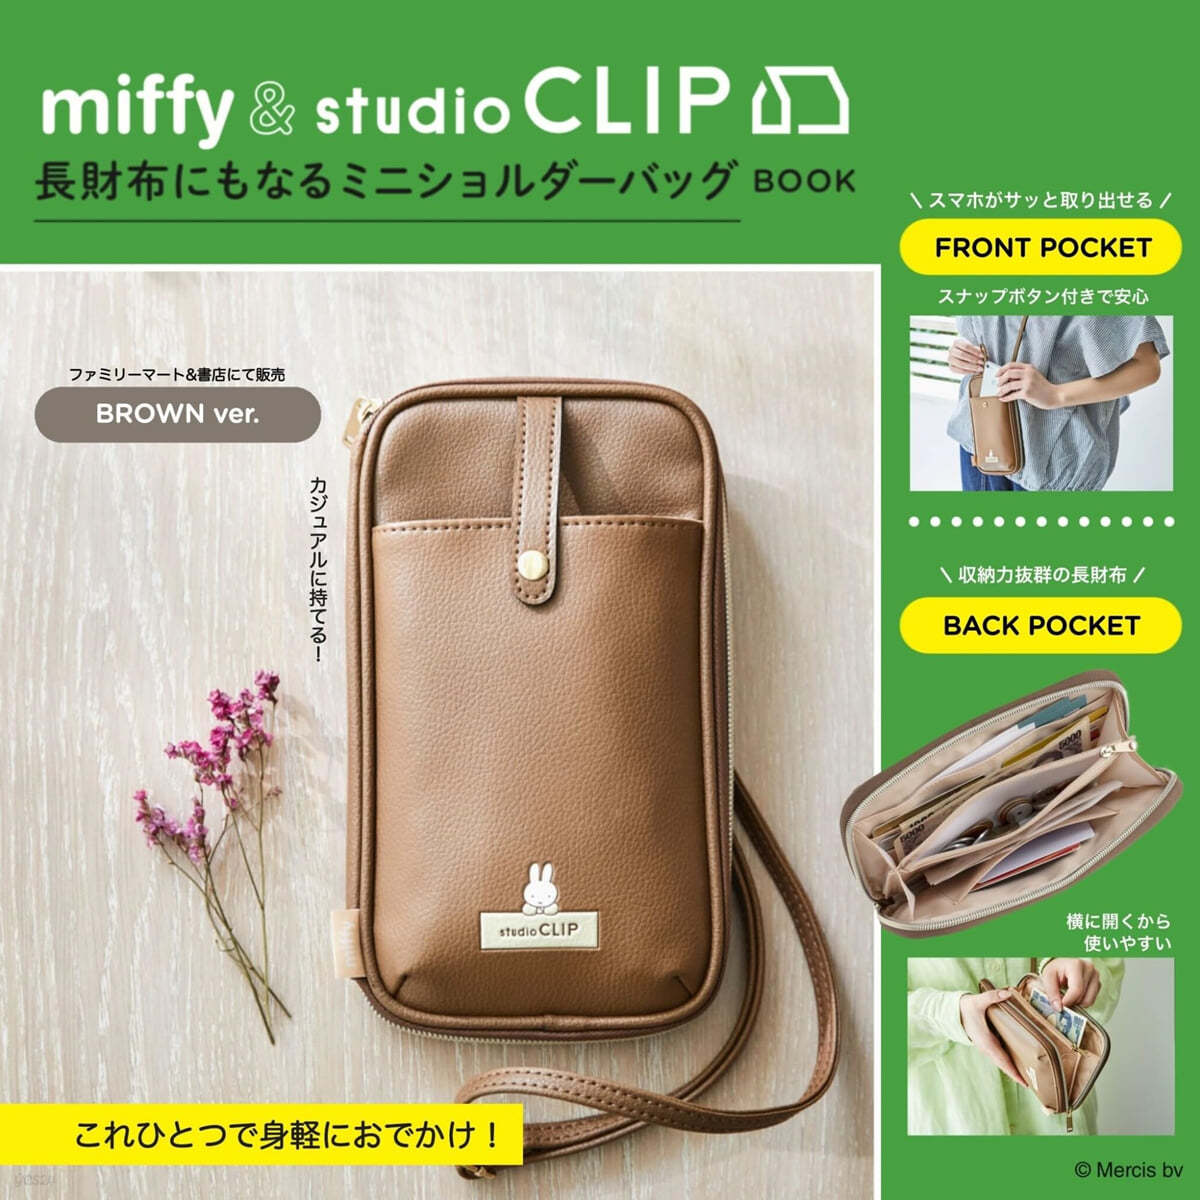 miffy & studio CLIP 長財布にもなるミニショルダ-バッグ BOOK BROWN ver.